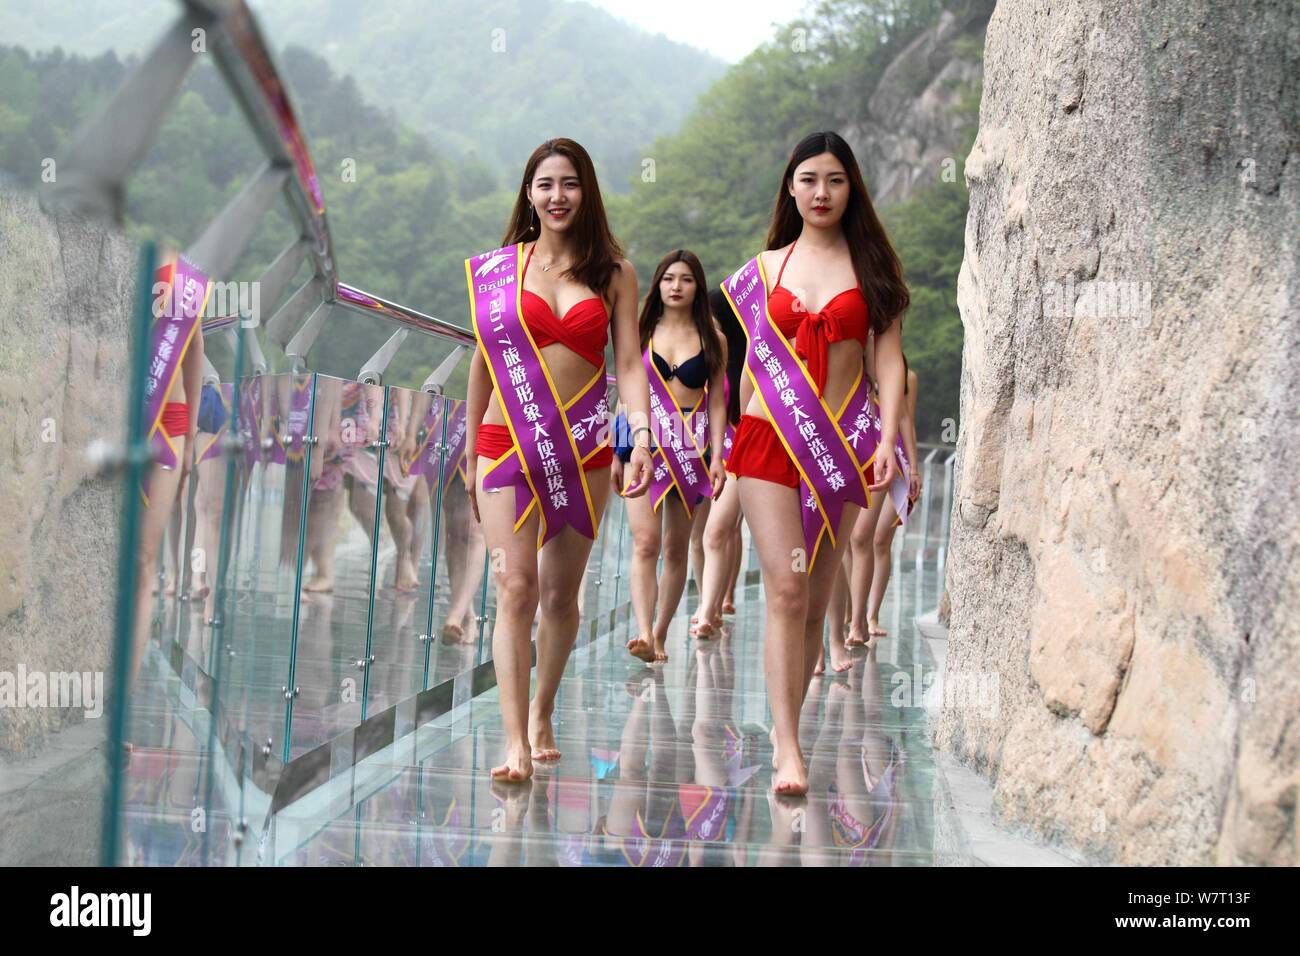 Bikini-dressed girls walk on a glass walkway along the edge of a  image